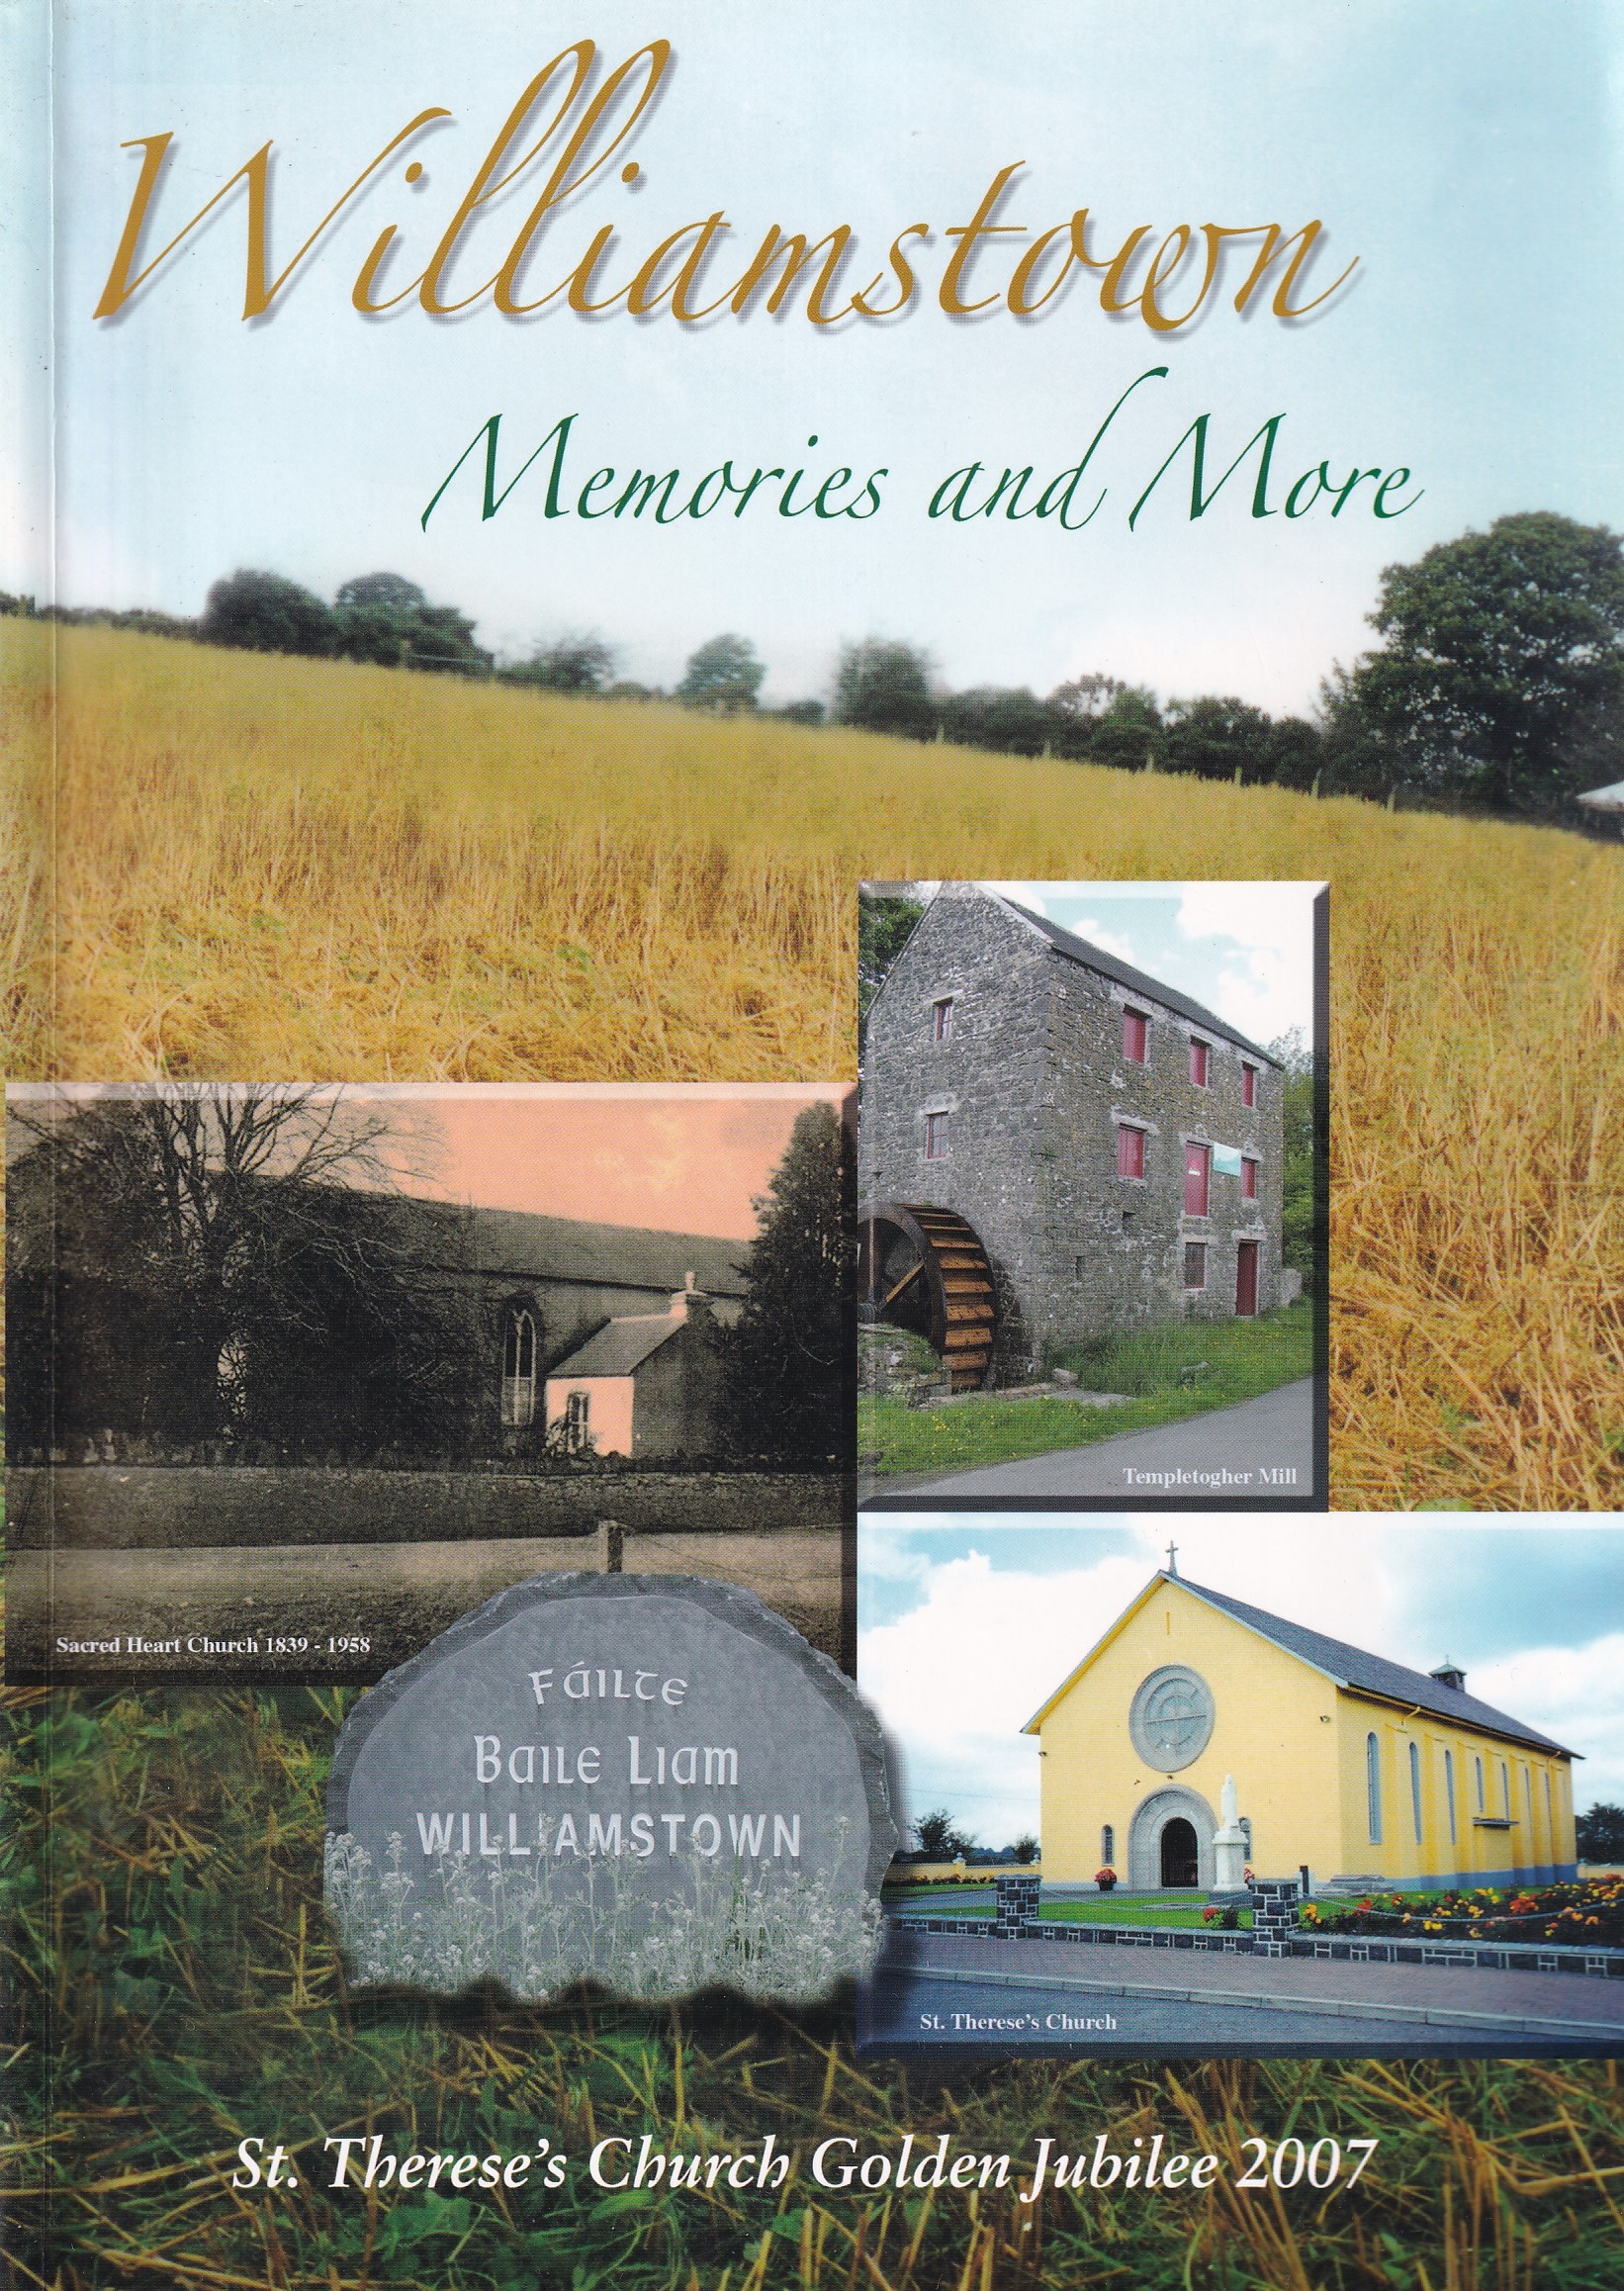 Williamstown: Memories and More by John Heviken